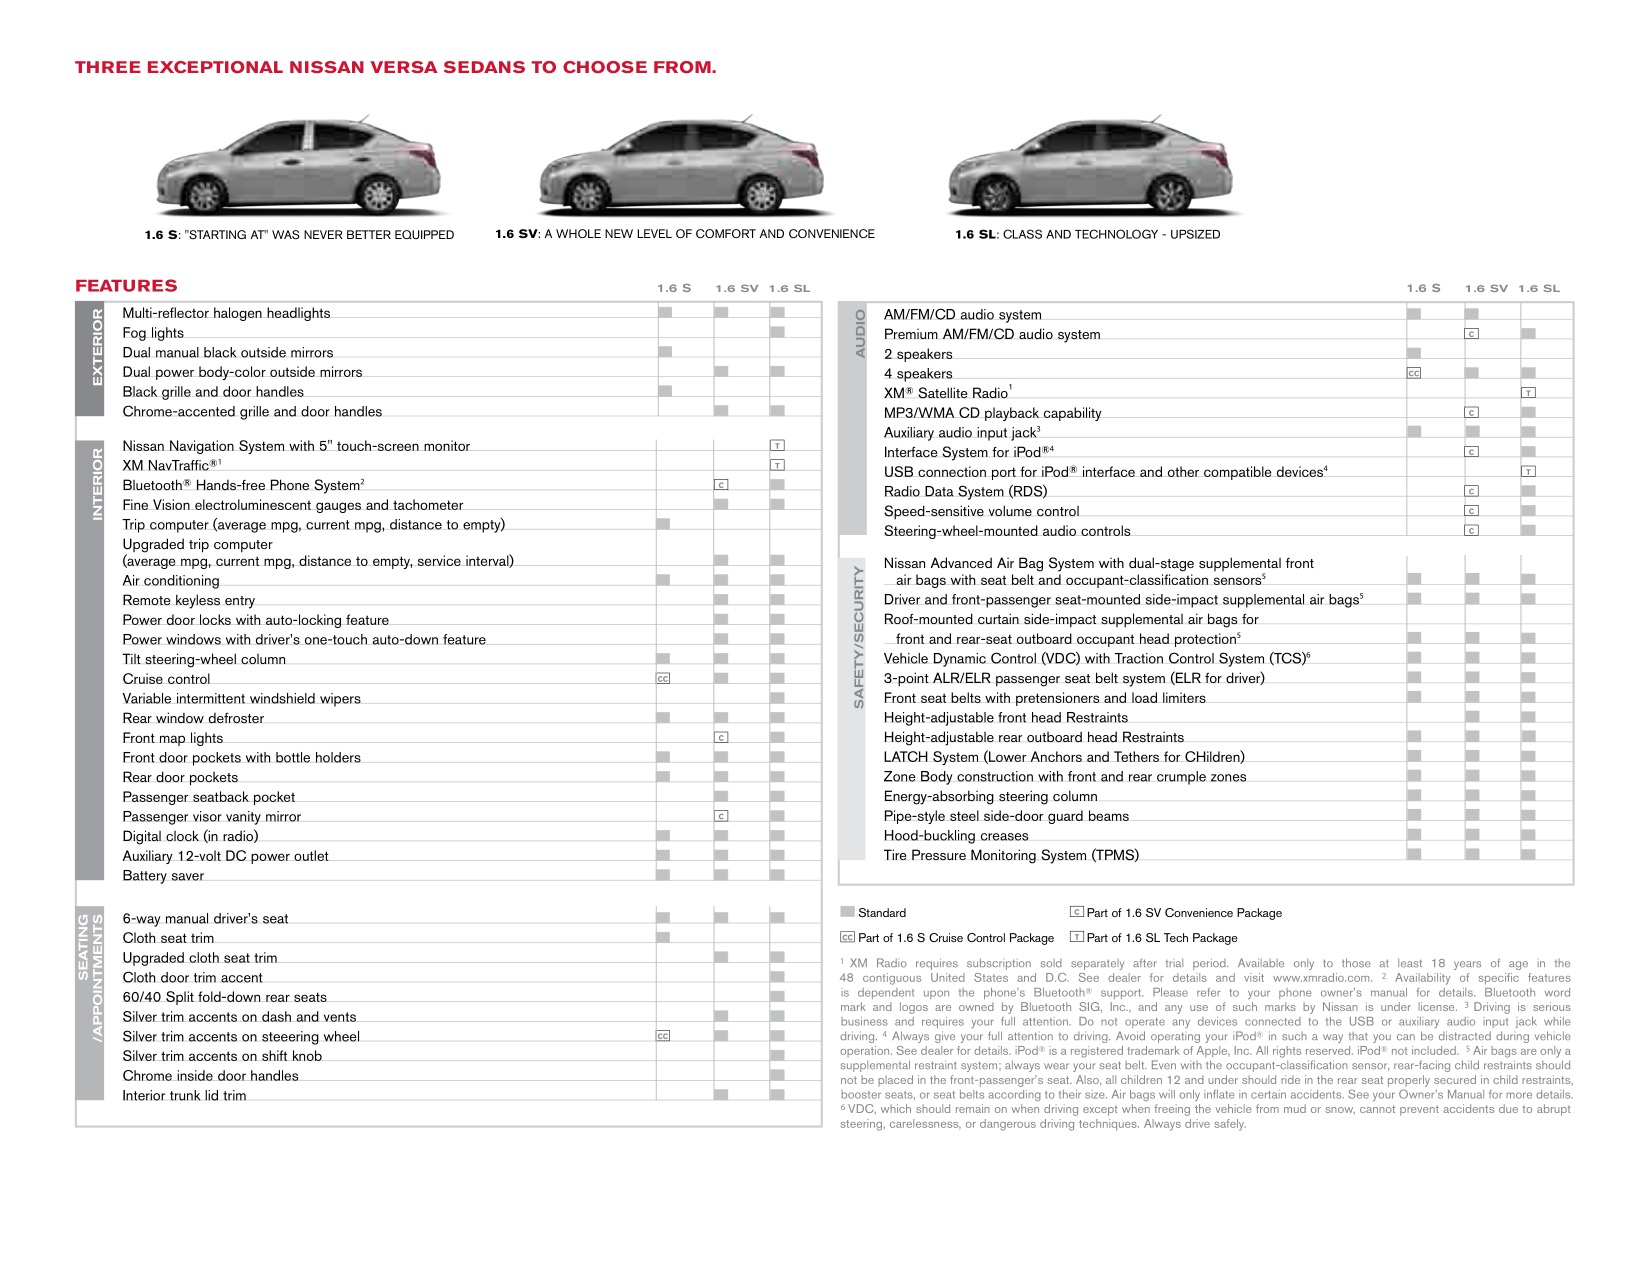 2012 Nissan Versa Sedan Brochure Page 3